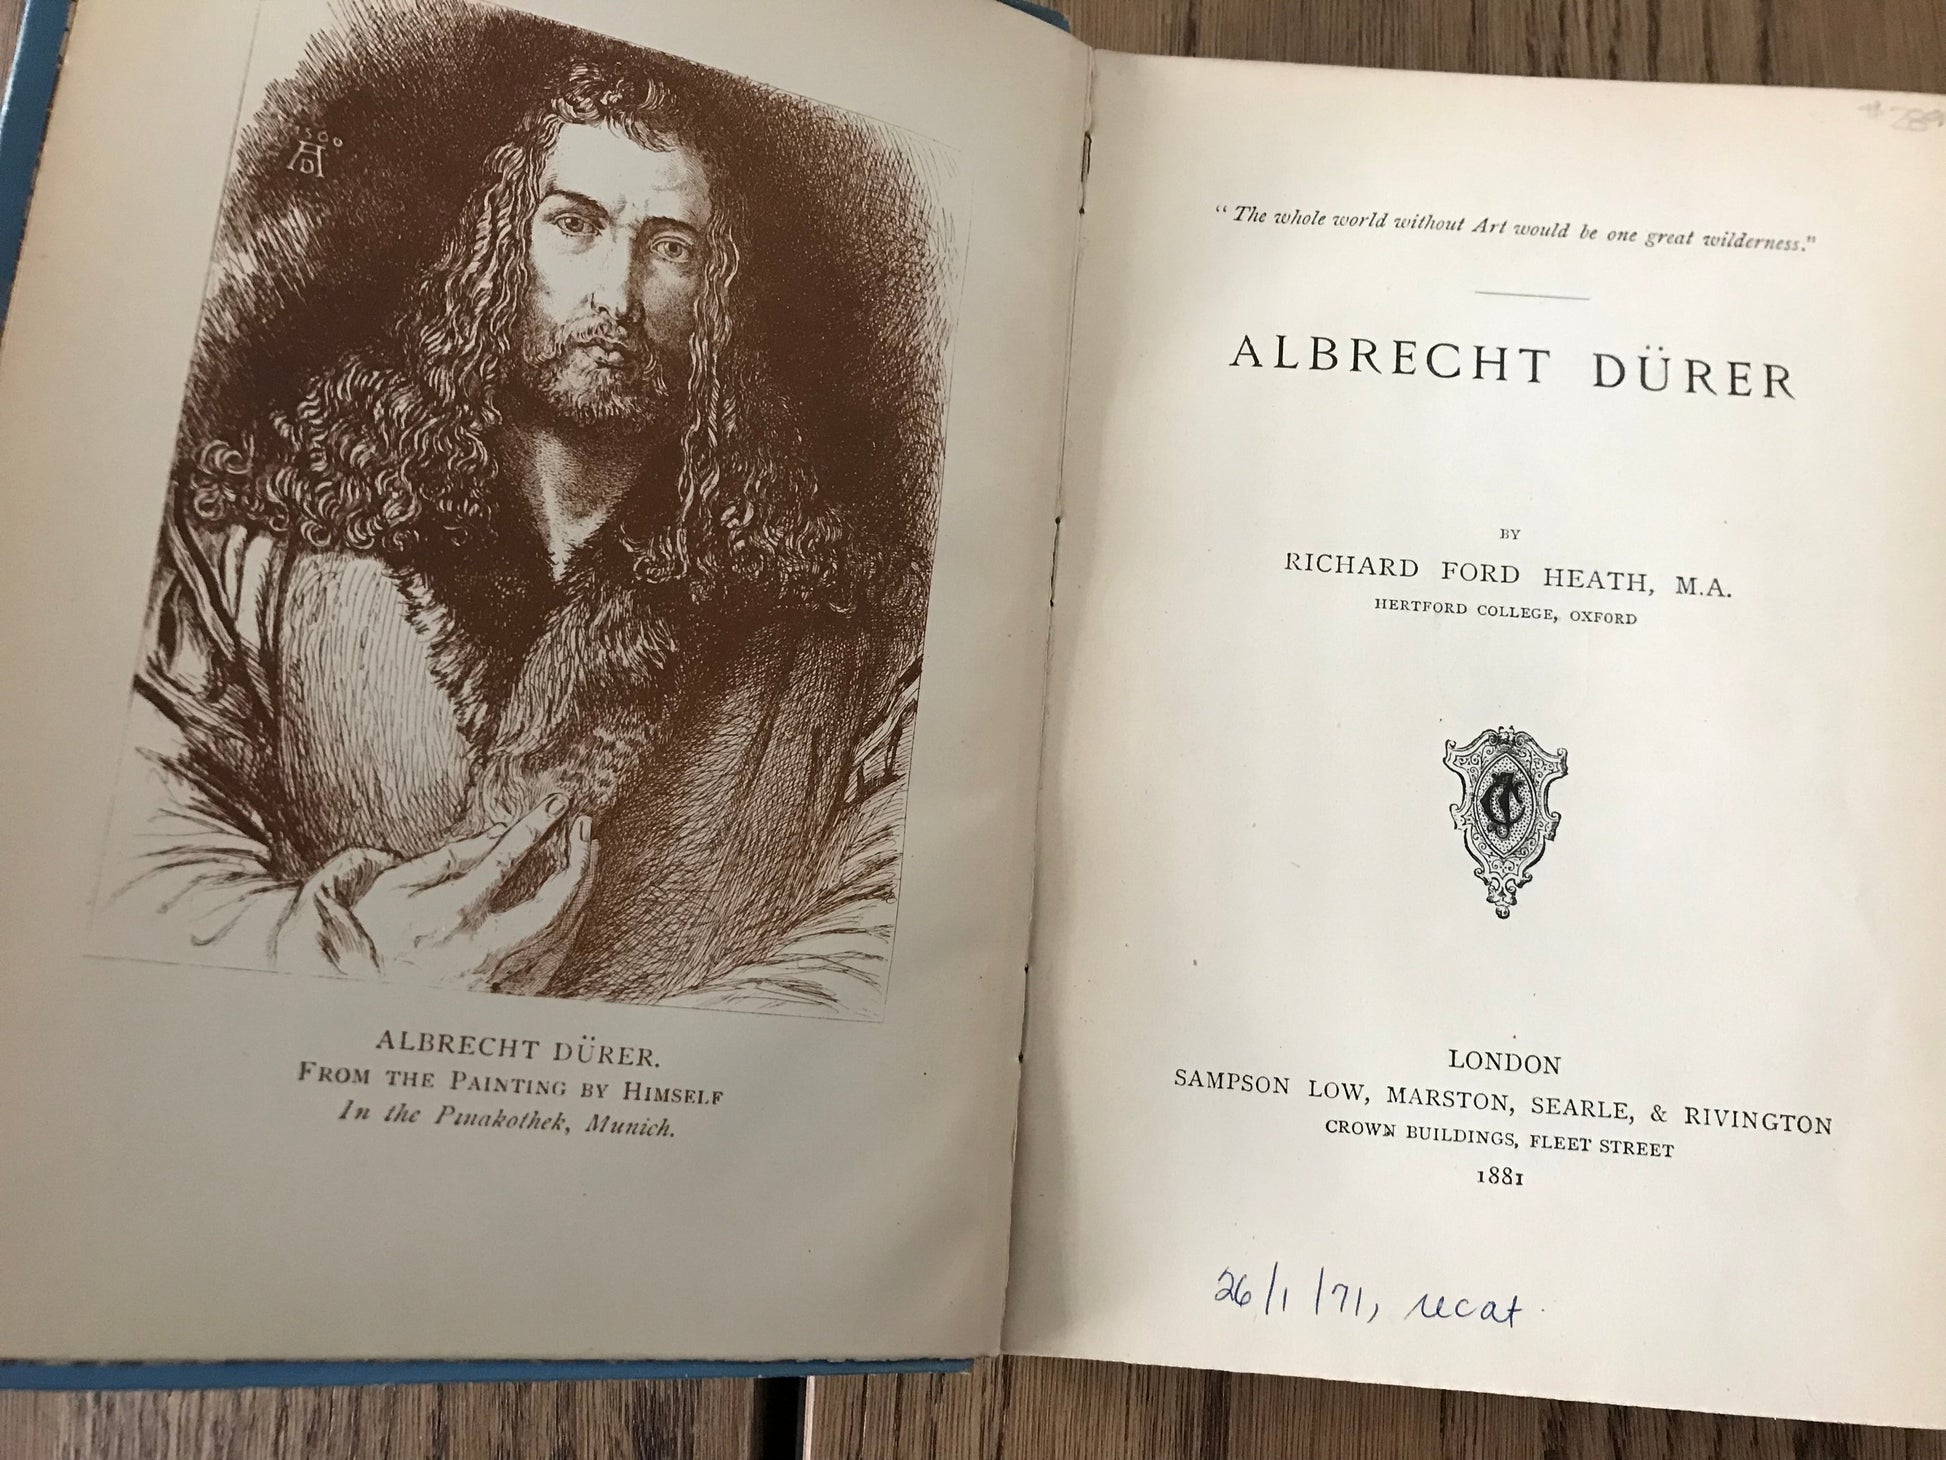 ALBRECHT DURER - RICHARD FORD HEATH M.A. BooksCardsNBikes